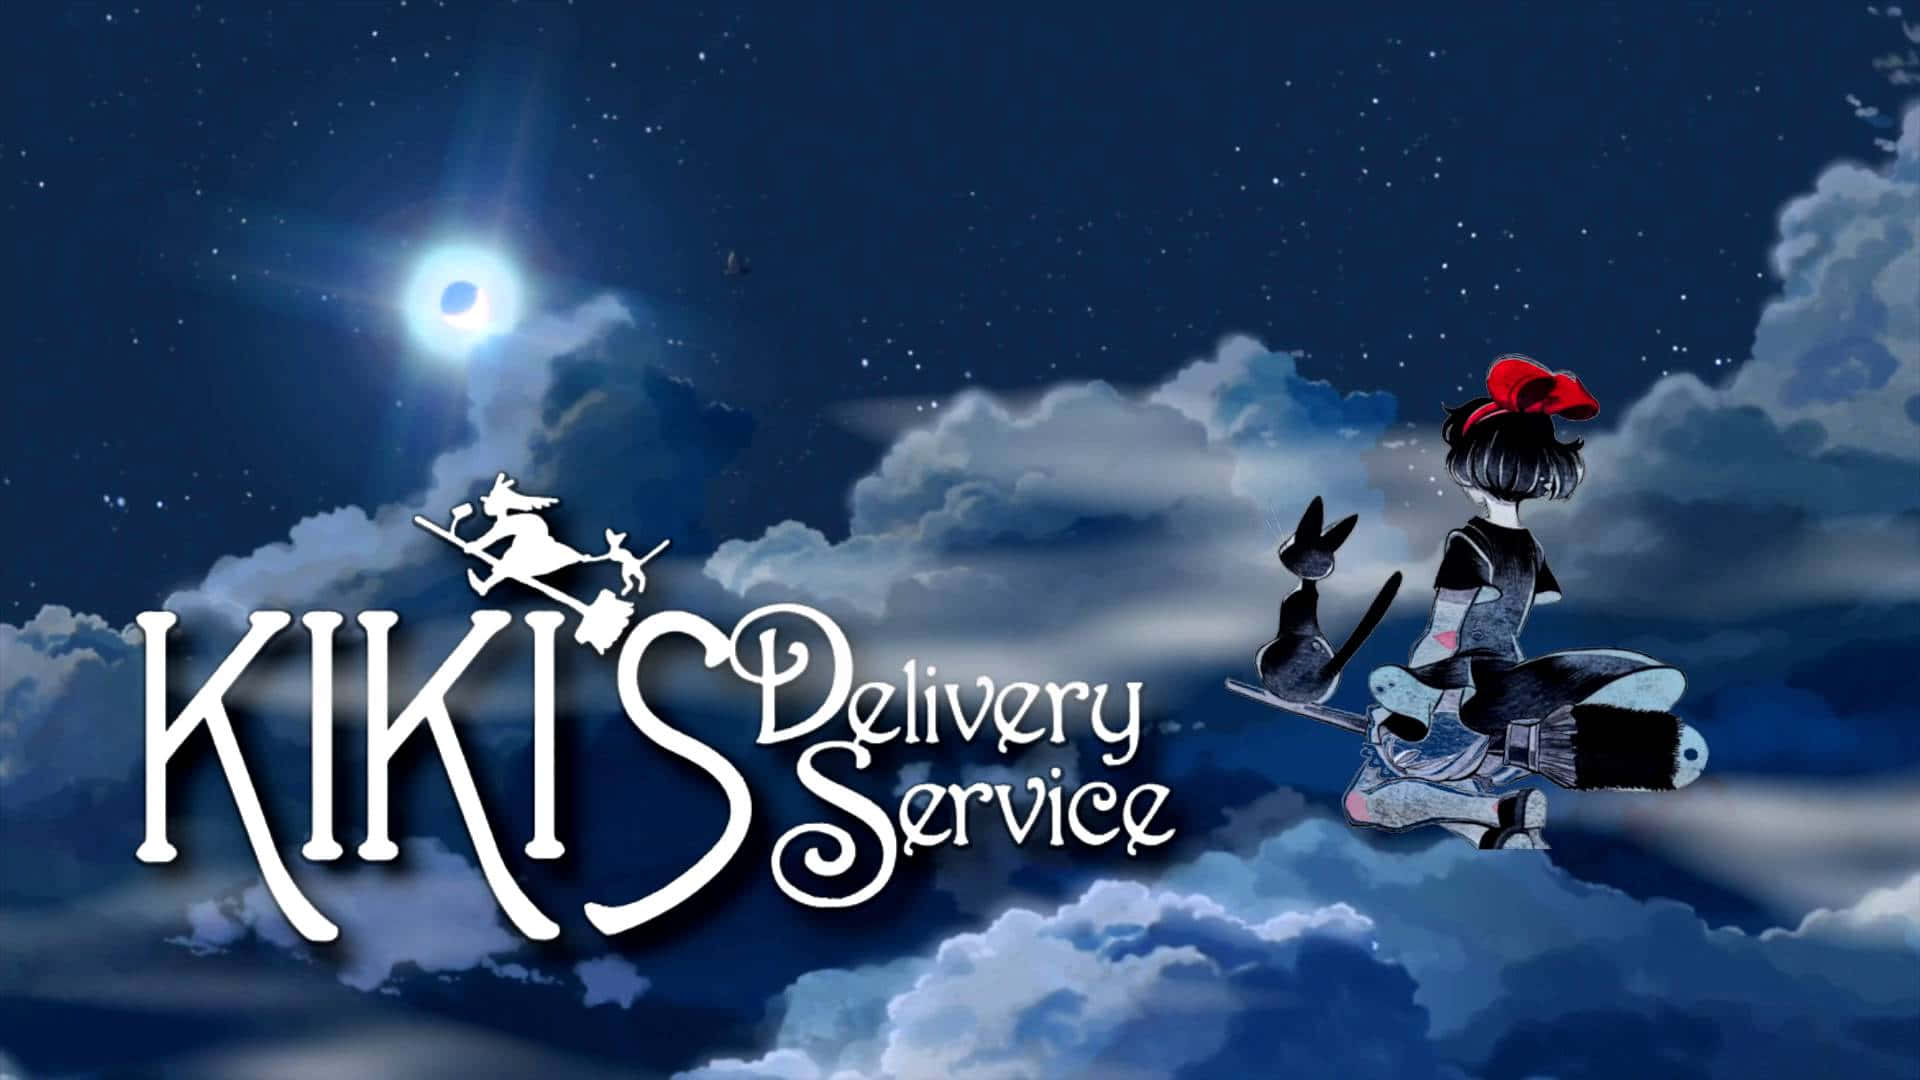 Kiki's Delivery Service Wallpaper